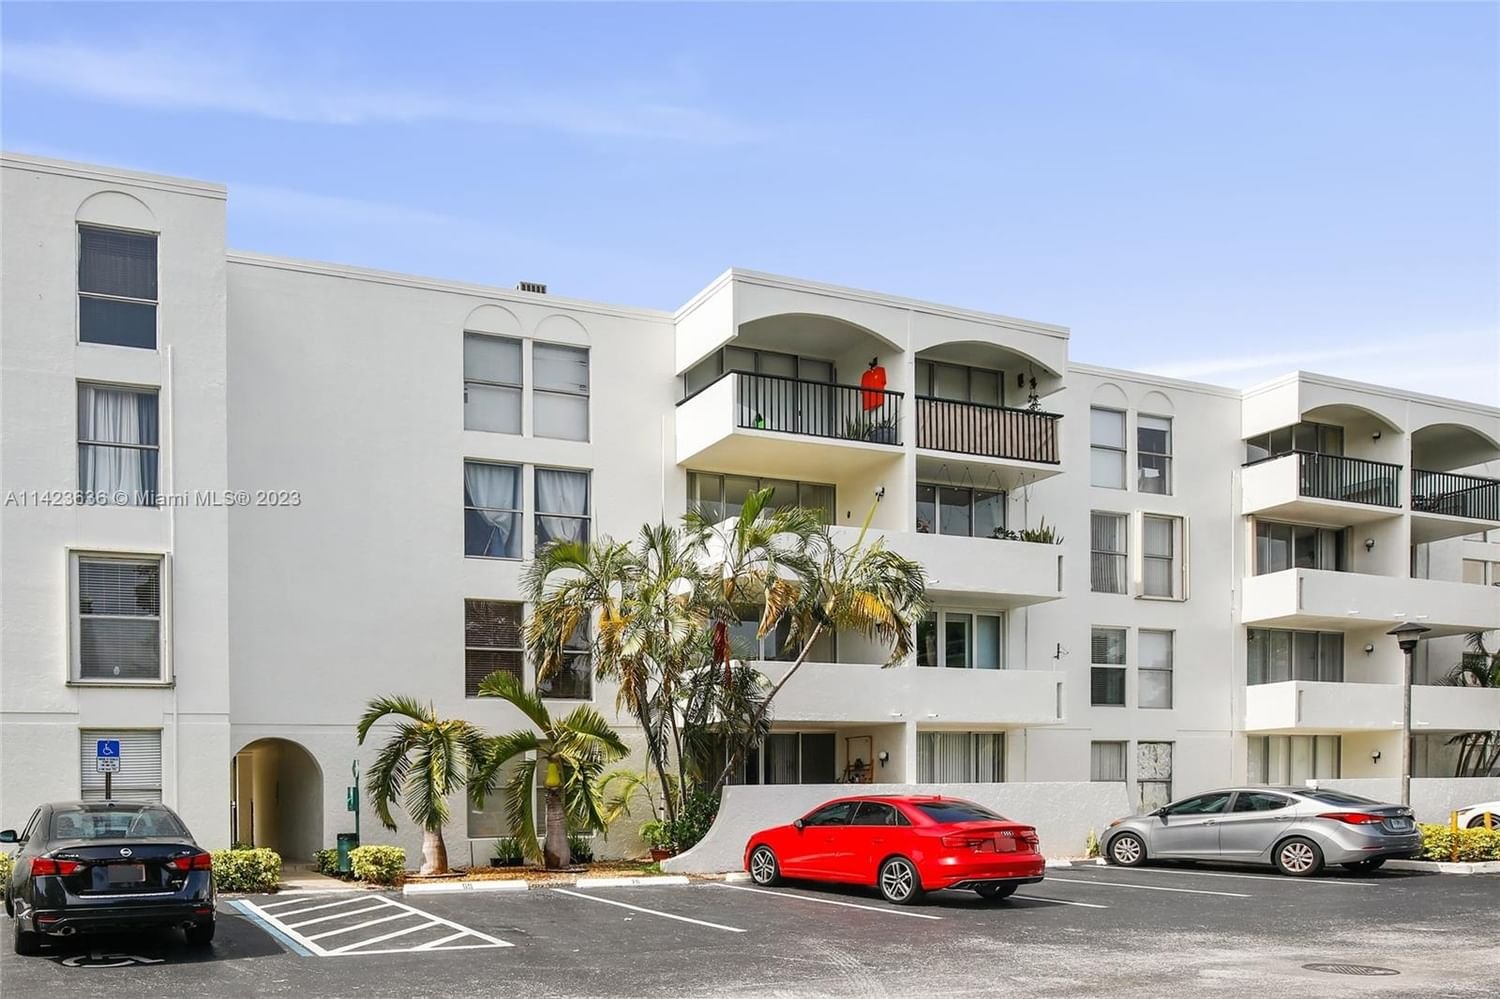 Real estate property located at 2160 16th Ave #121, Miami-Dade County, Miami, FL